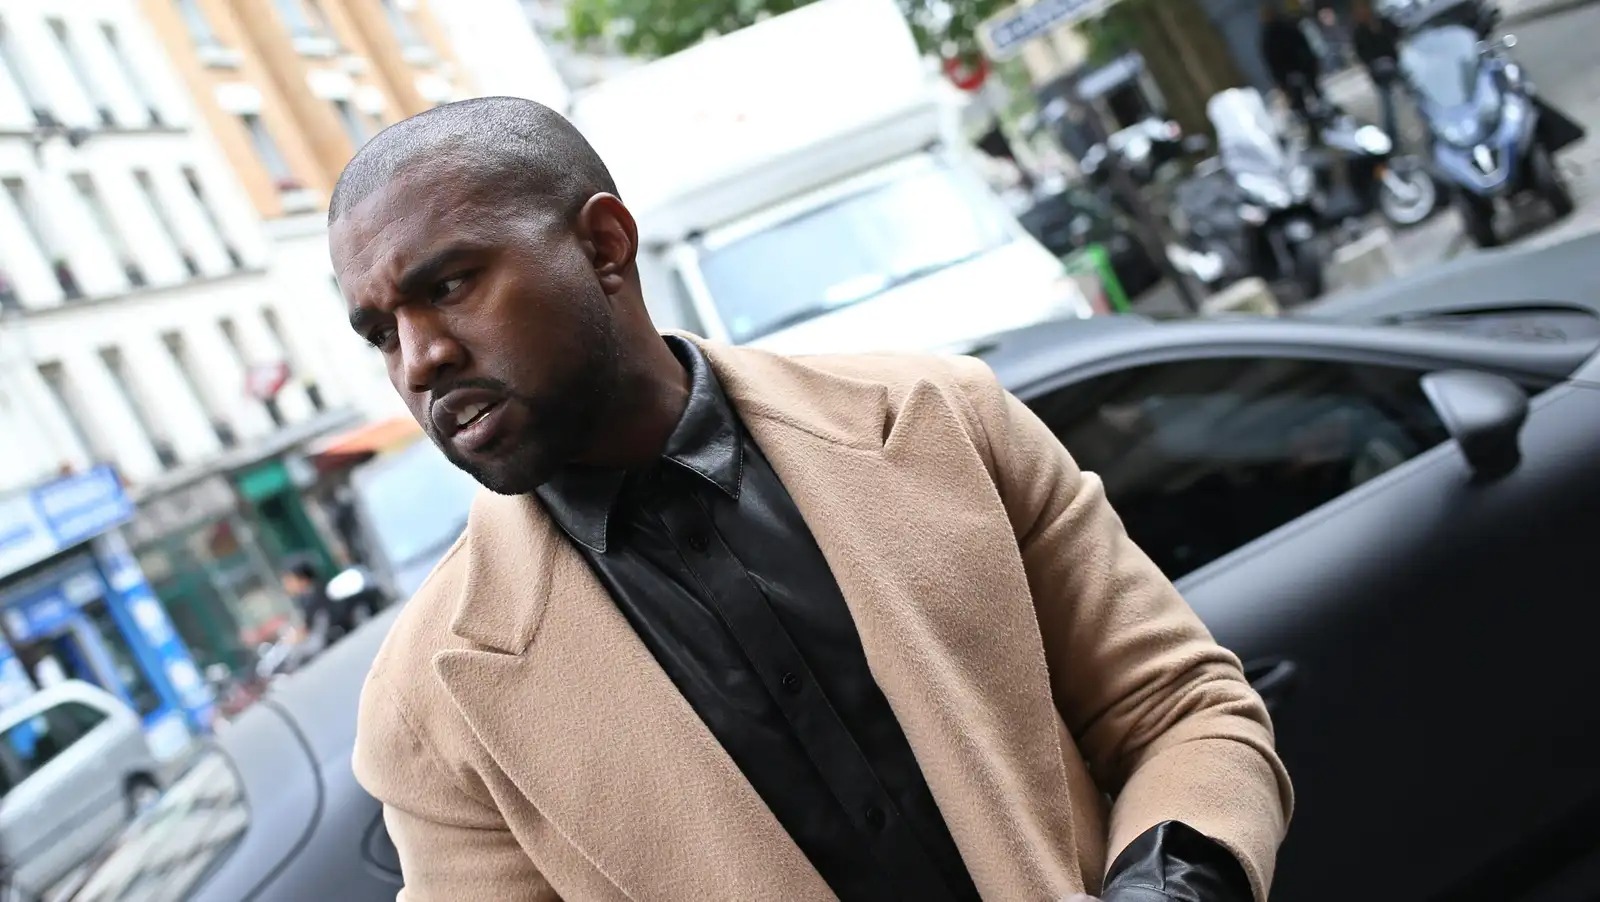 Ban και από το Twitter για τον Kanye West εξαιτίας δημοσιεύσεων αντισημιτικού περιεχομένου